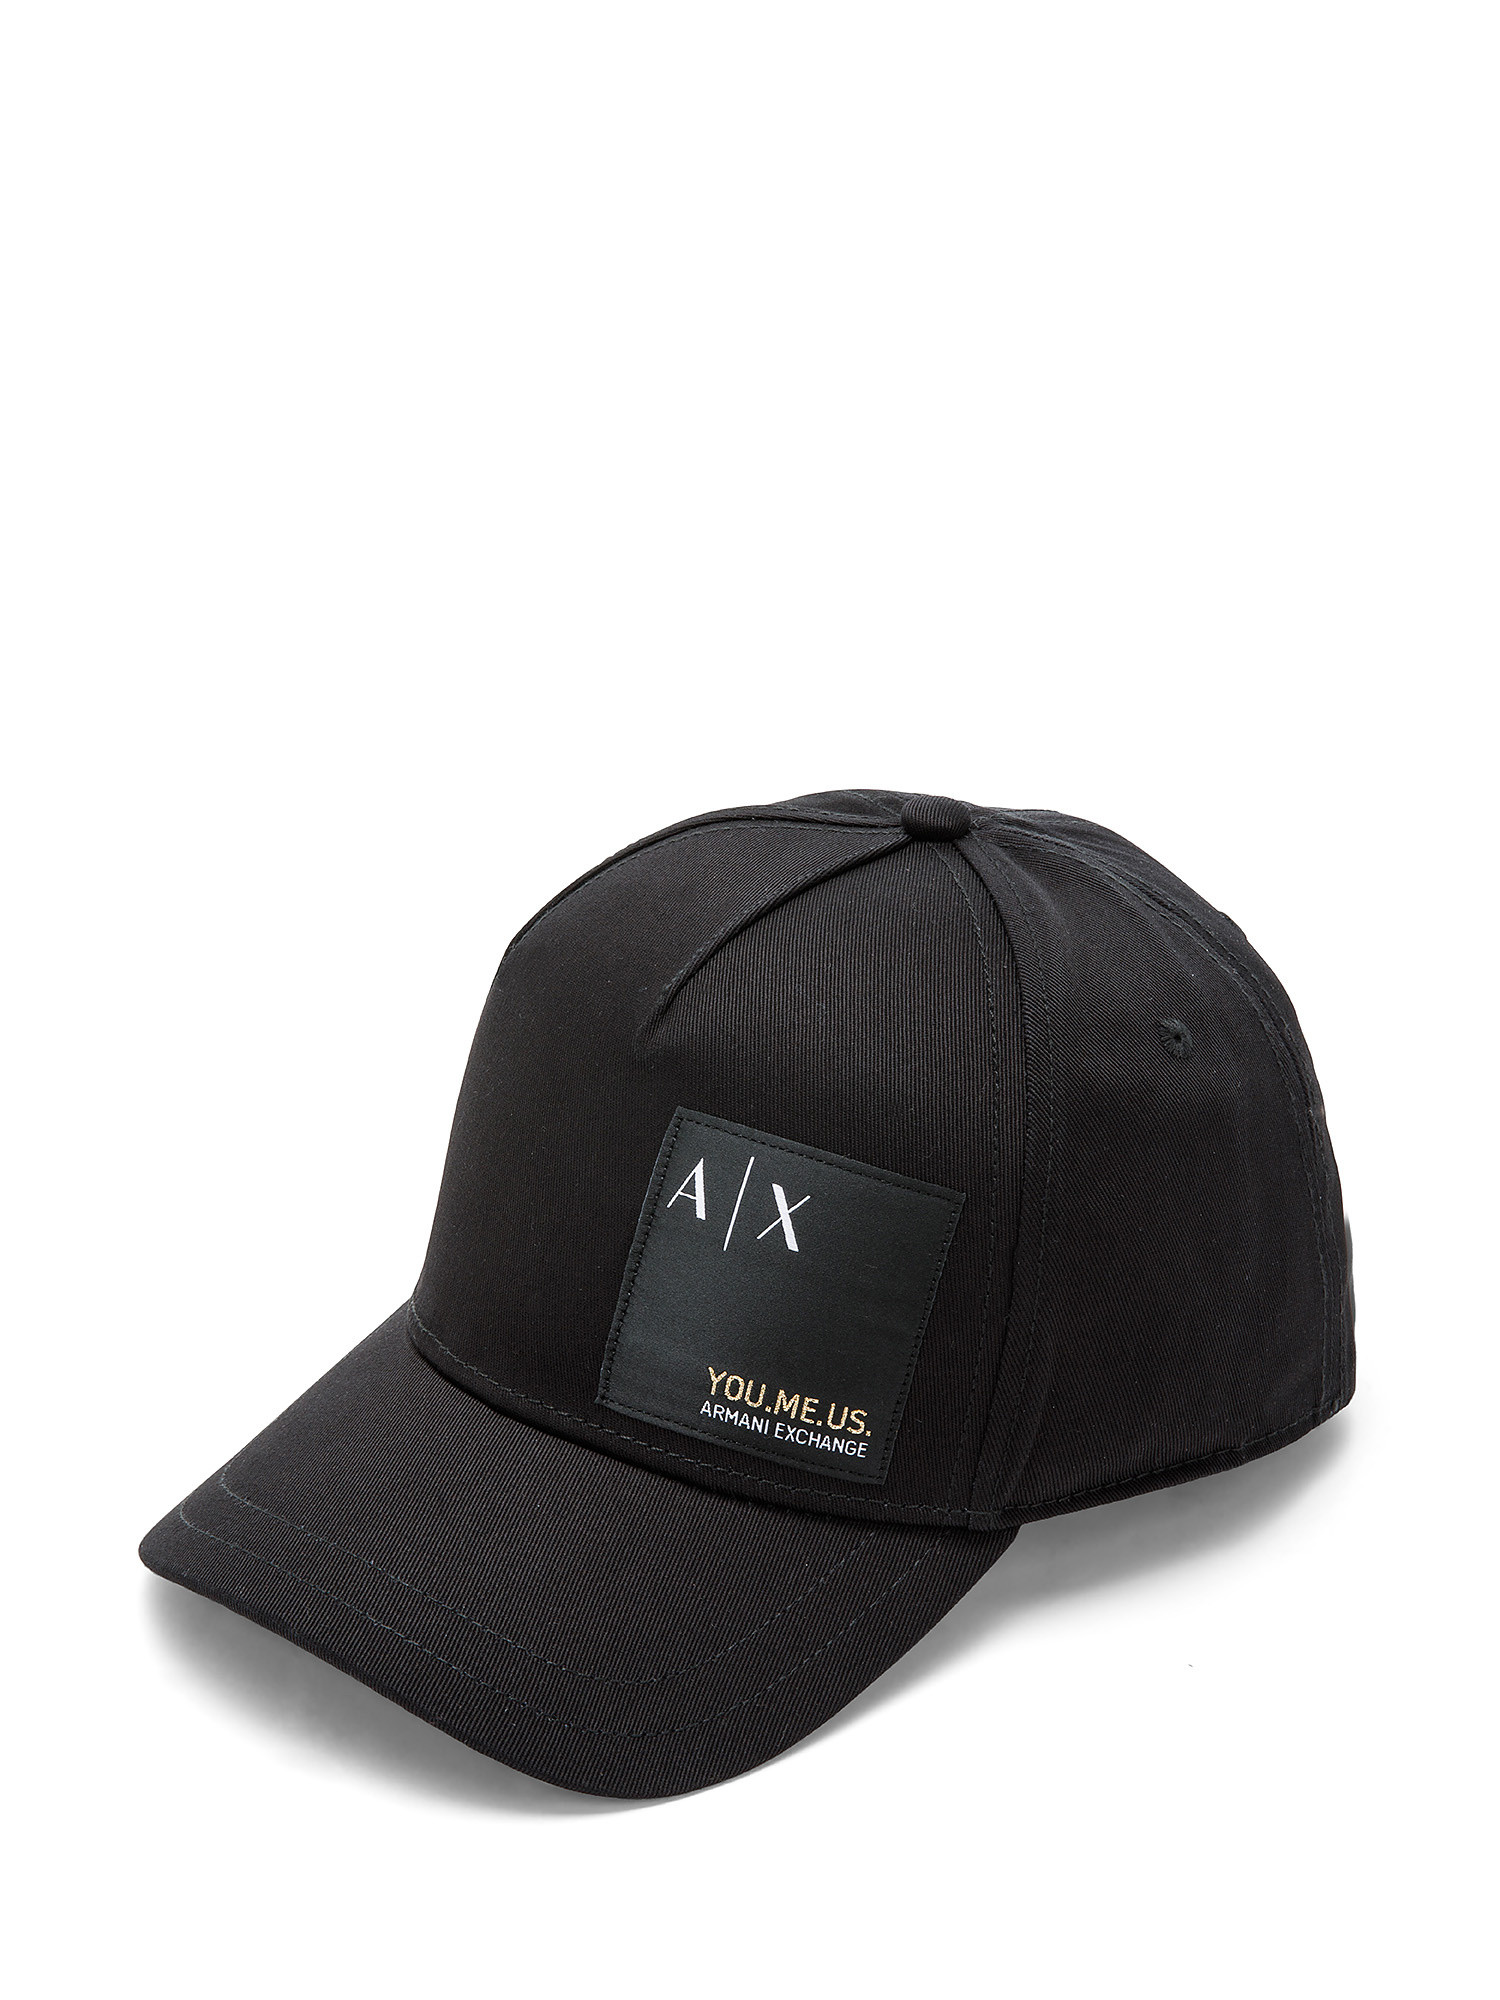 Armani Exchange - Cappello in cotone organico con visiera, Nero, large image number 0